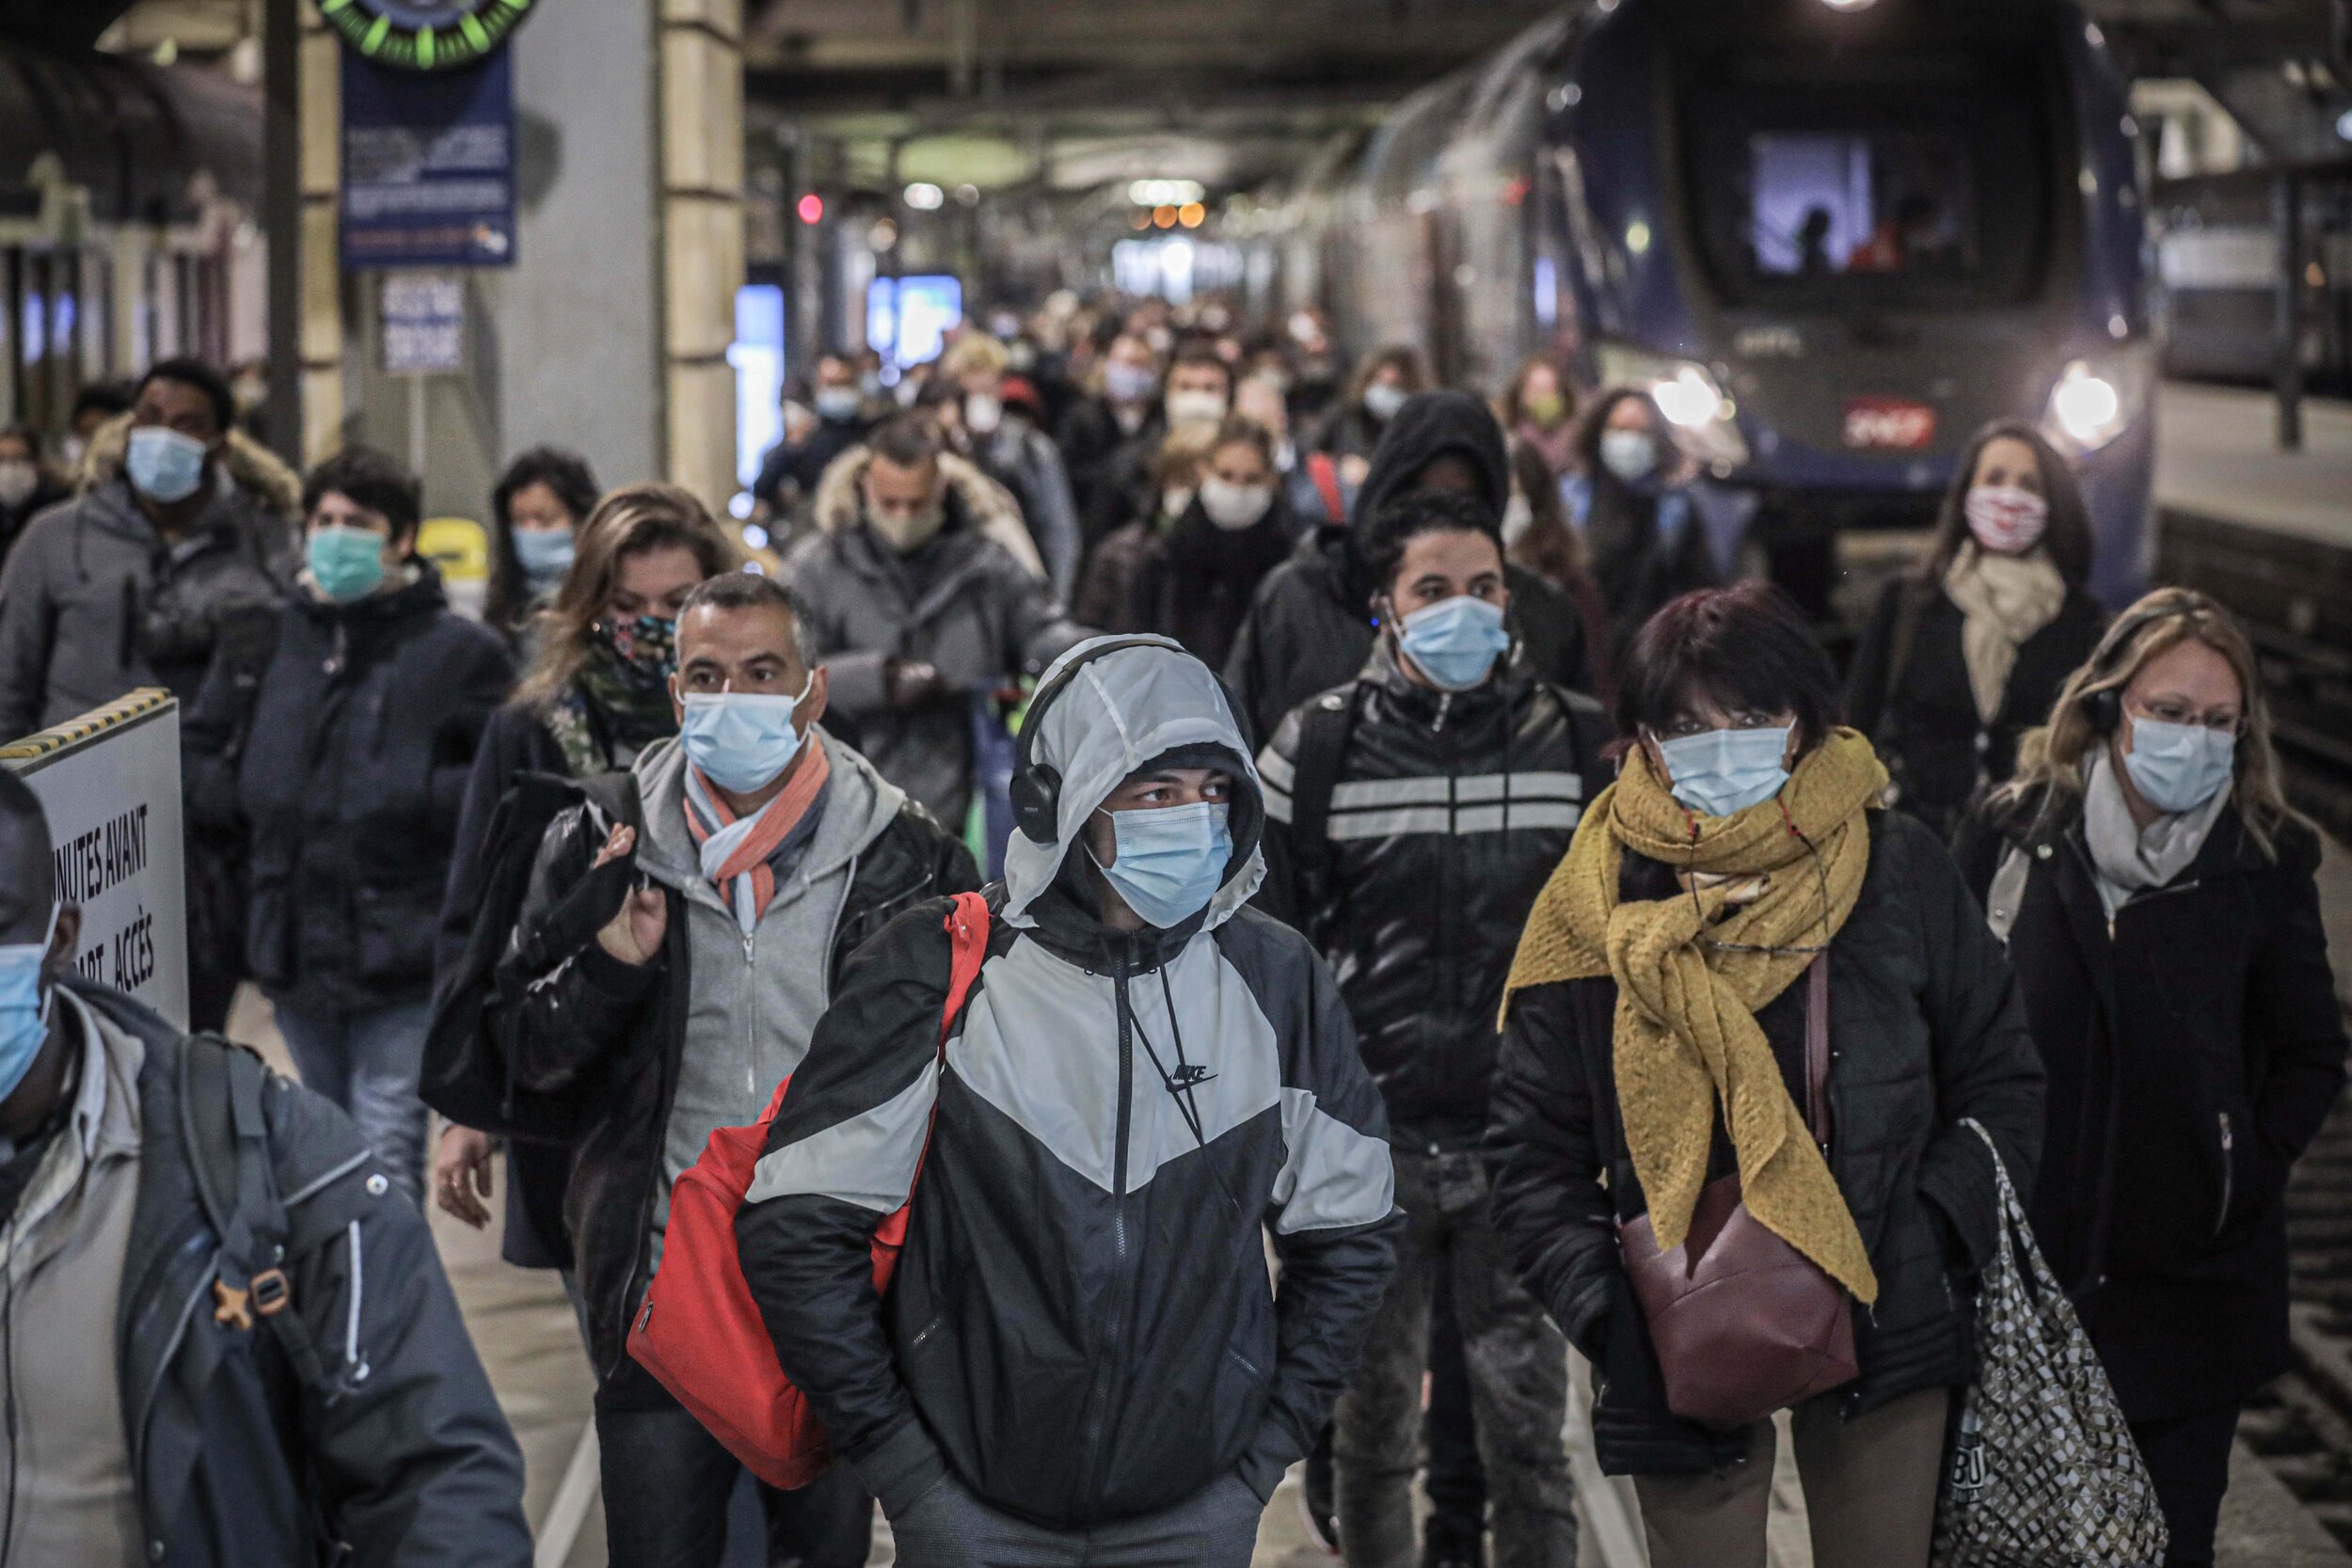   © Luc Nobout / IP3; Paris, France, le 12 mai 2020 - Arrivals at Montparnasse station of passengers wearing protective masks during deconfinement.  